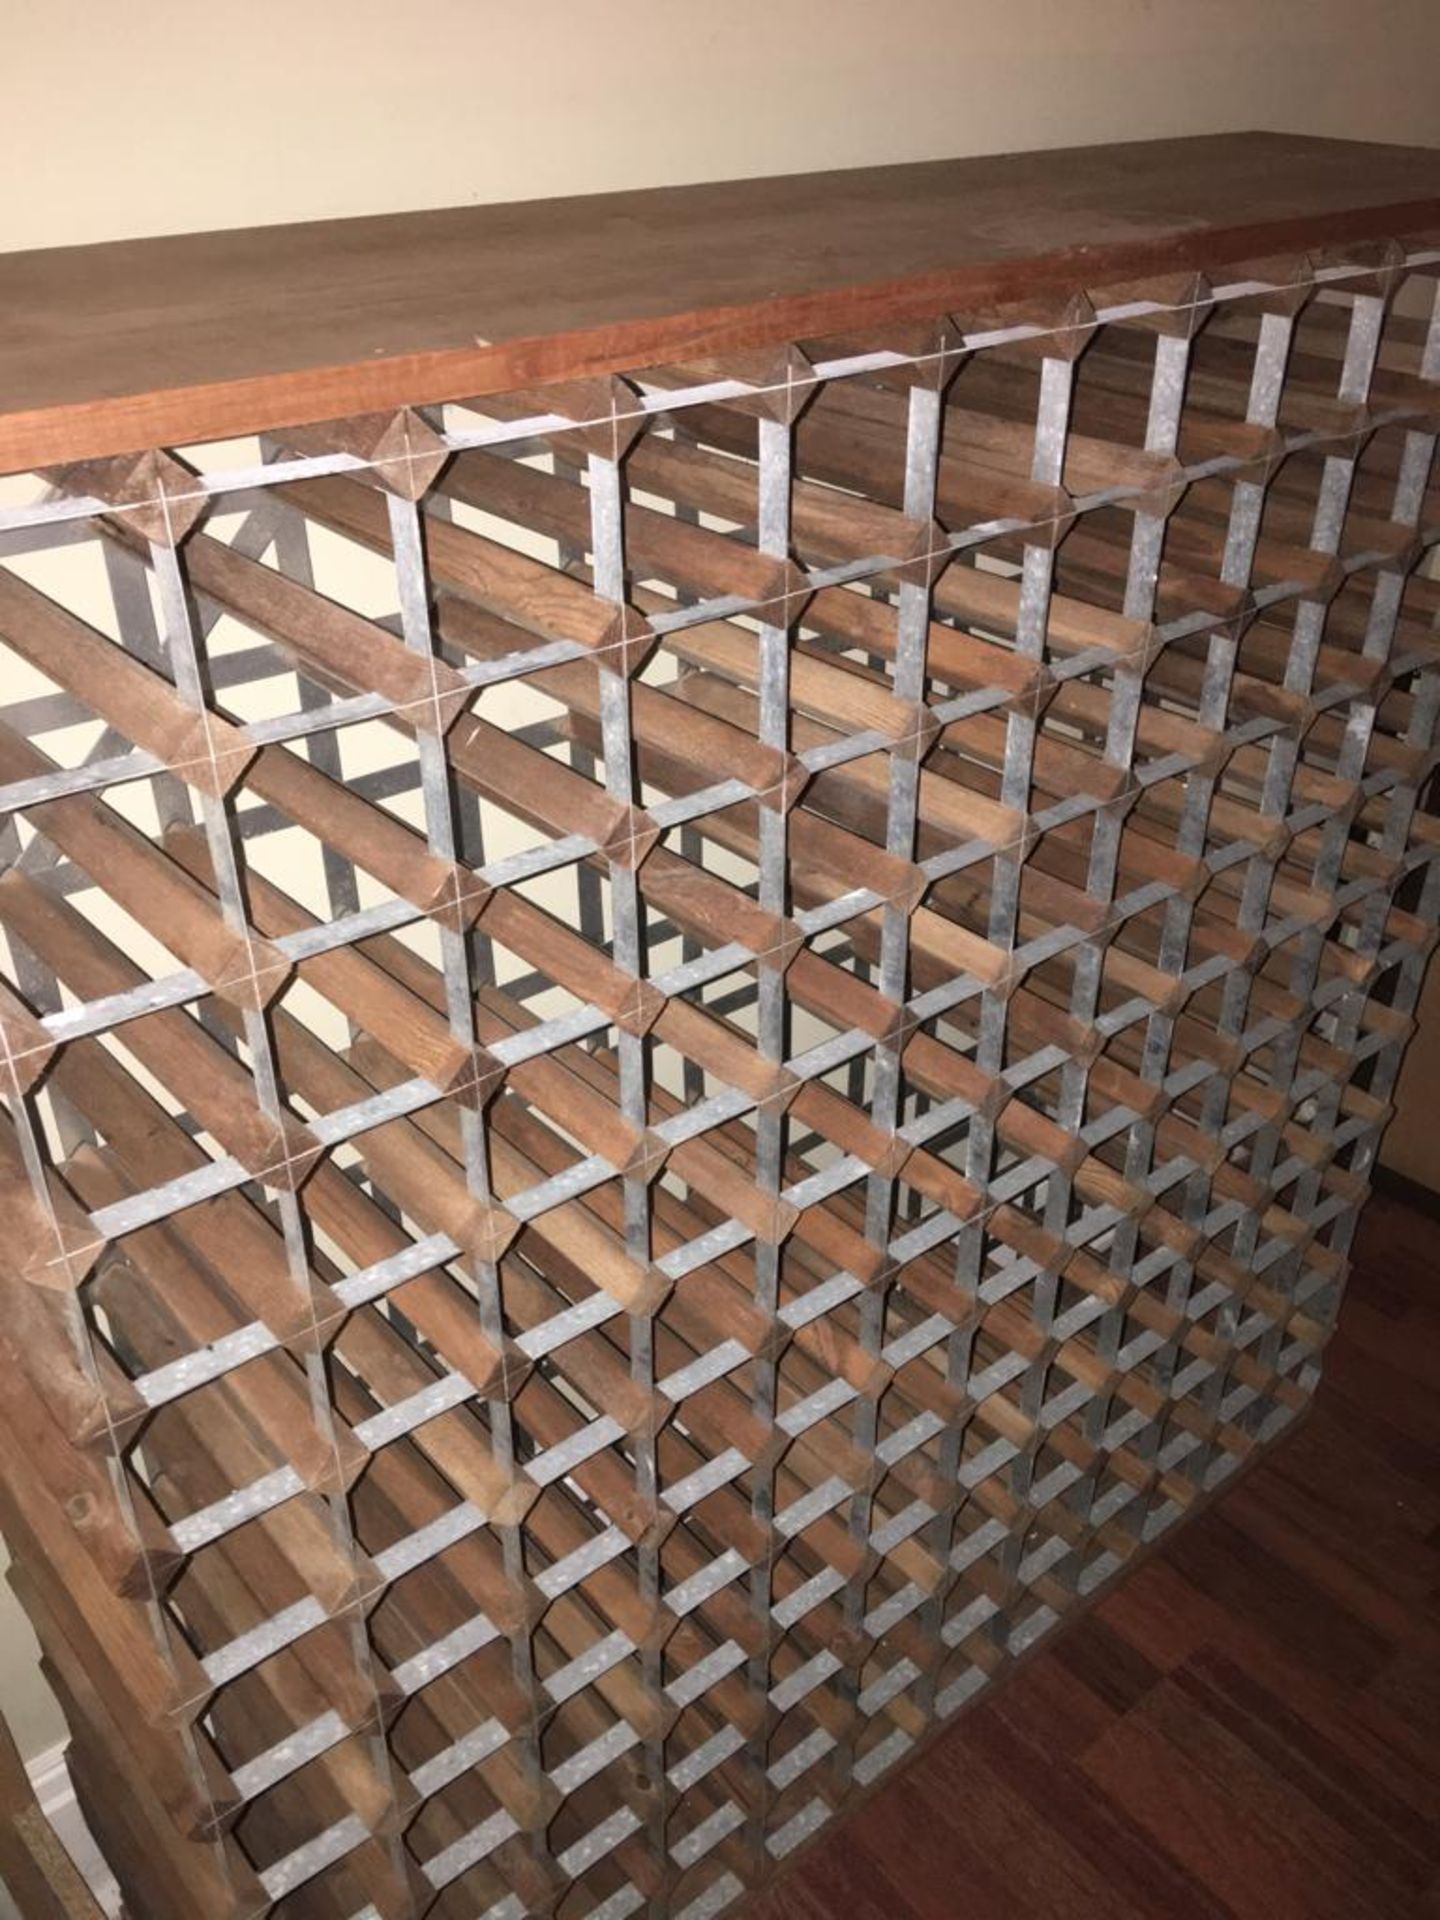 Freestanding wine rack - Image 2 of 2